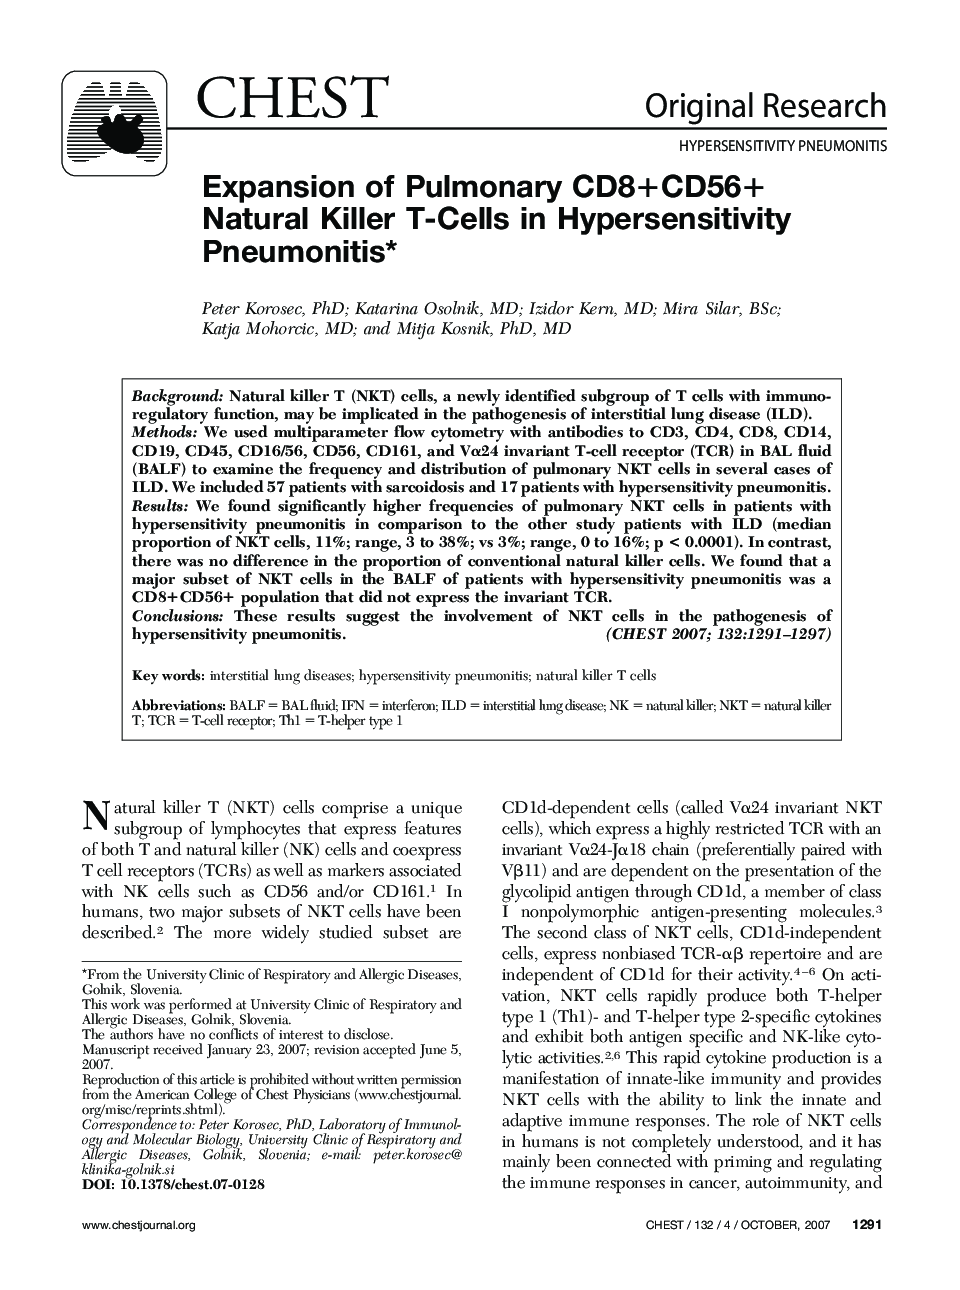 Expansion of Pulmonary CD8+CD56+ Natural Killer T-Cells in Hypersensitivity Pneumonitis 